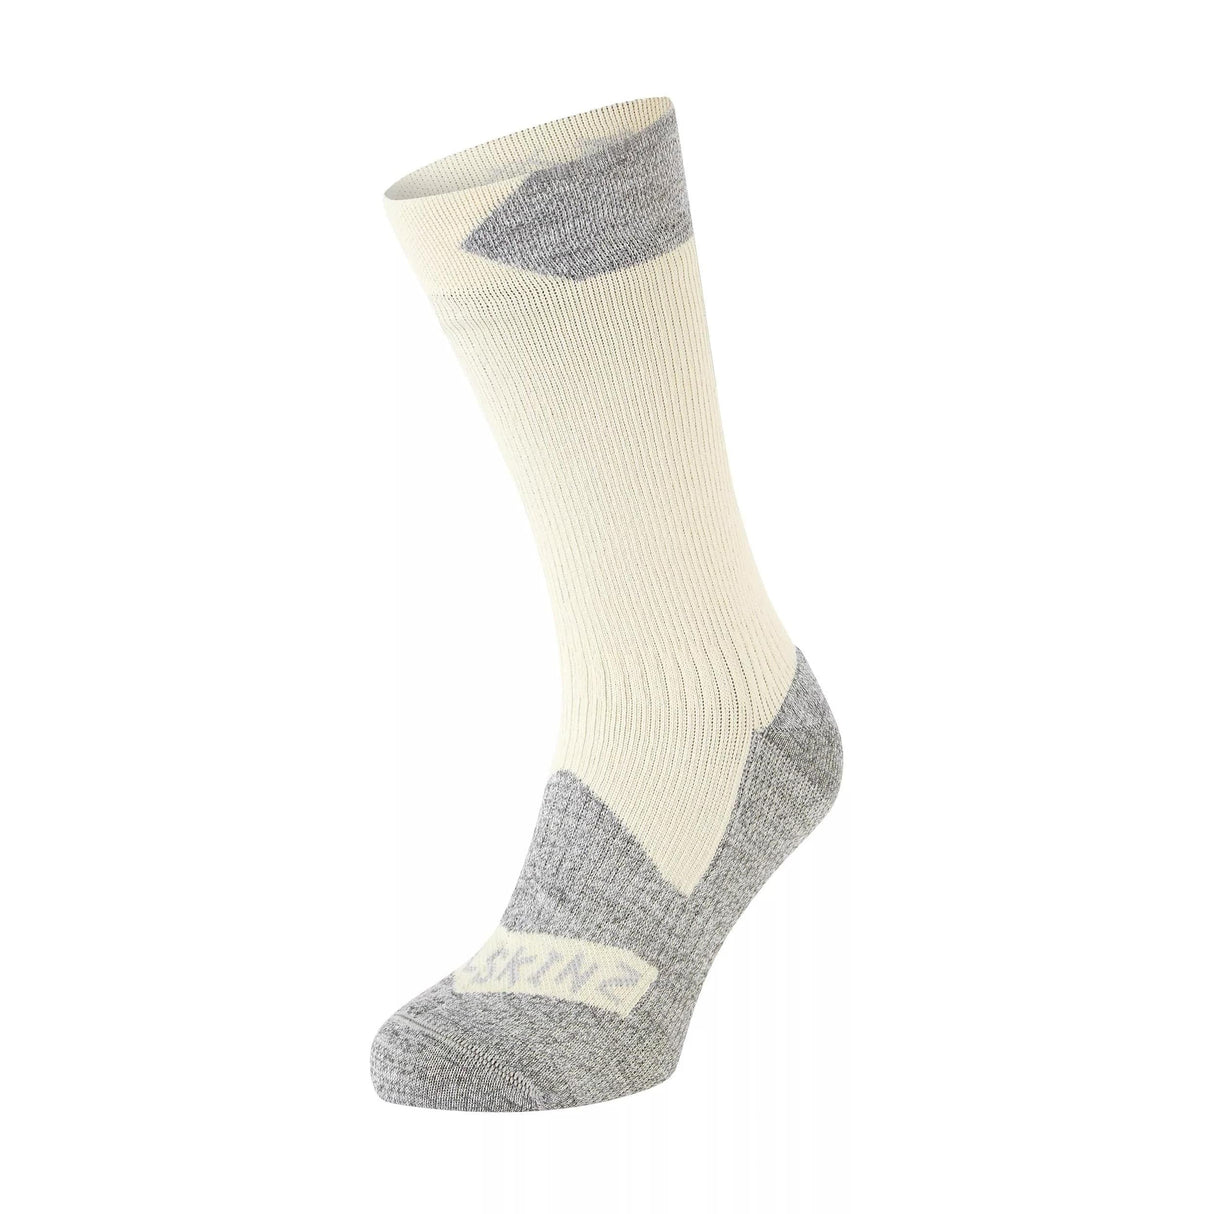 Sealskinz Raynham Waterproof All-Weather Mid-Length Socks  -  Small / Cream/Gray Marl